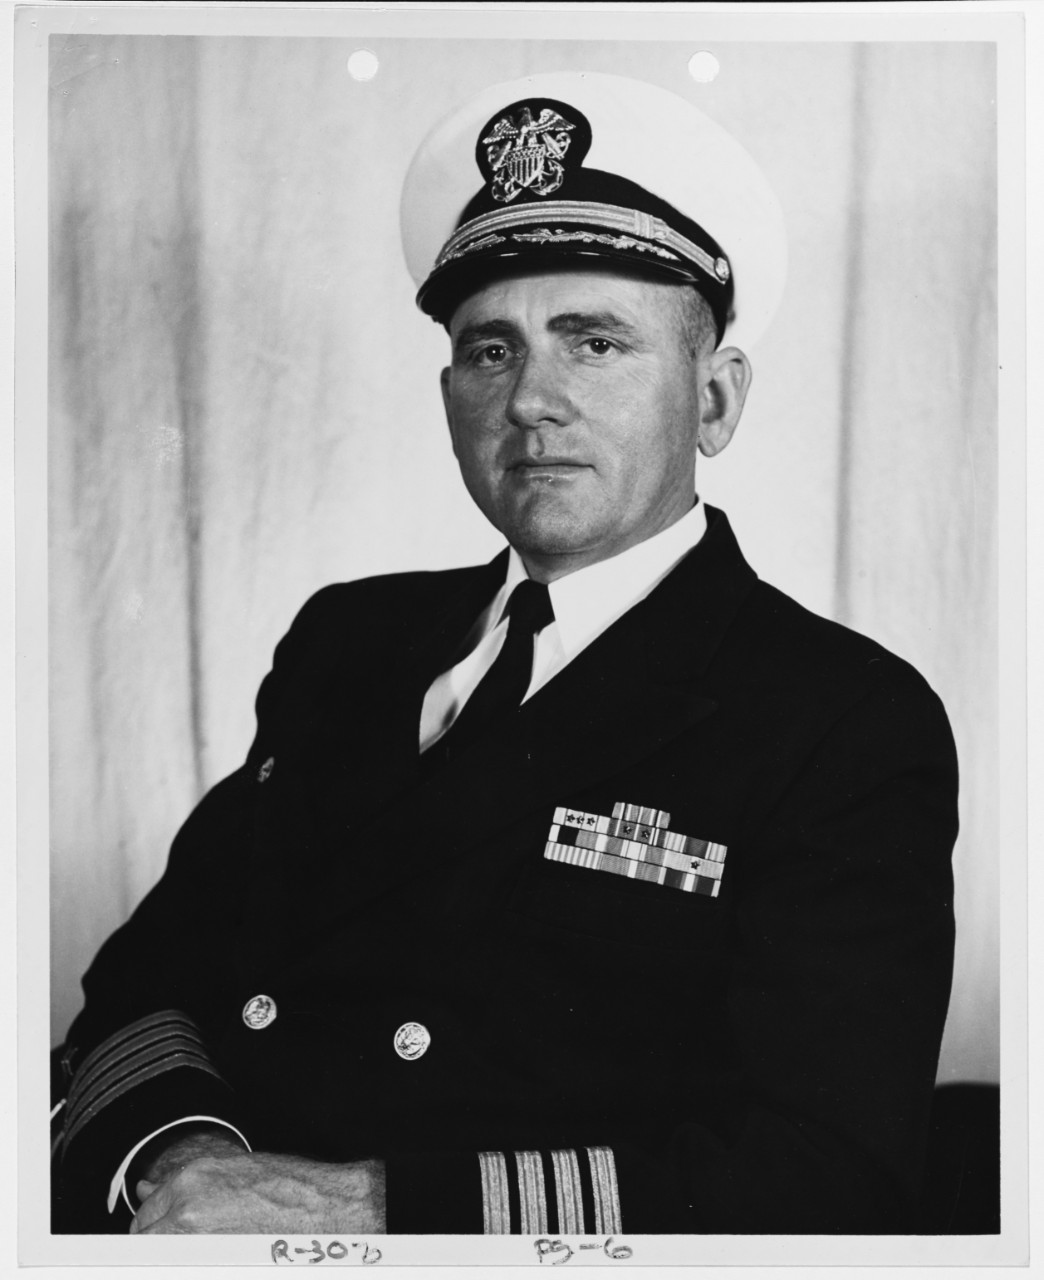 Daniel A. York, Captain, USN